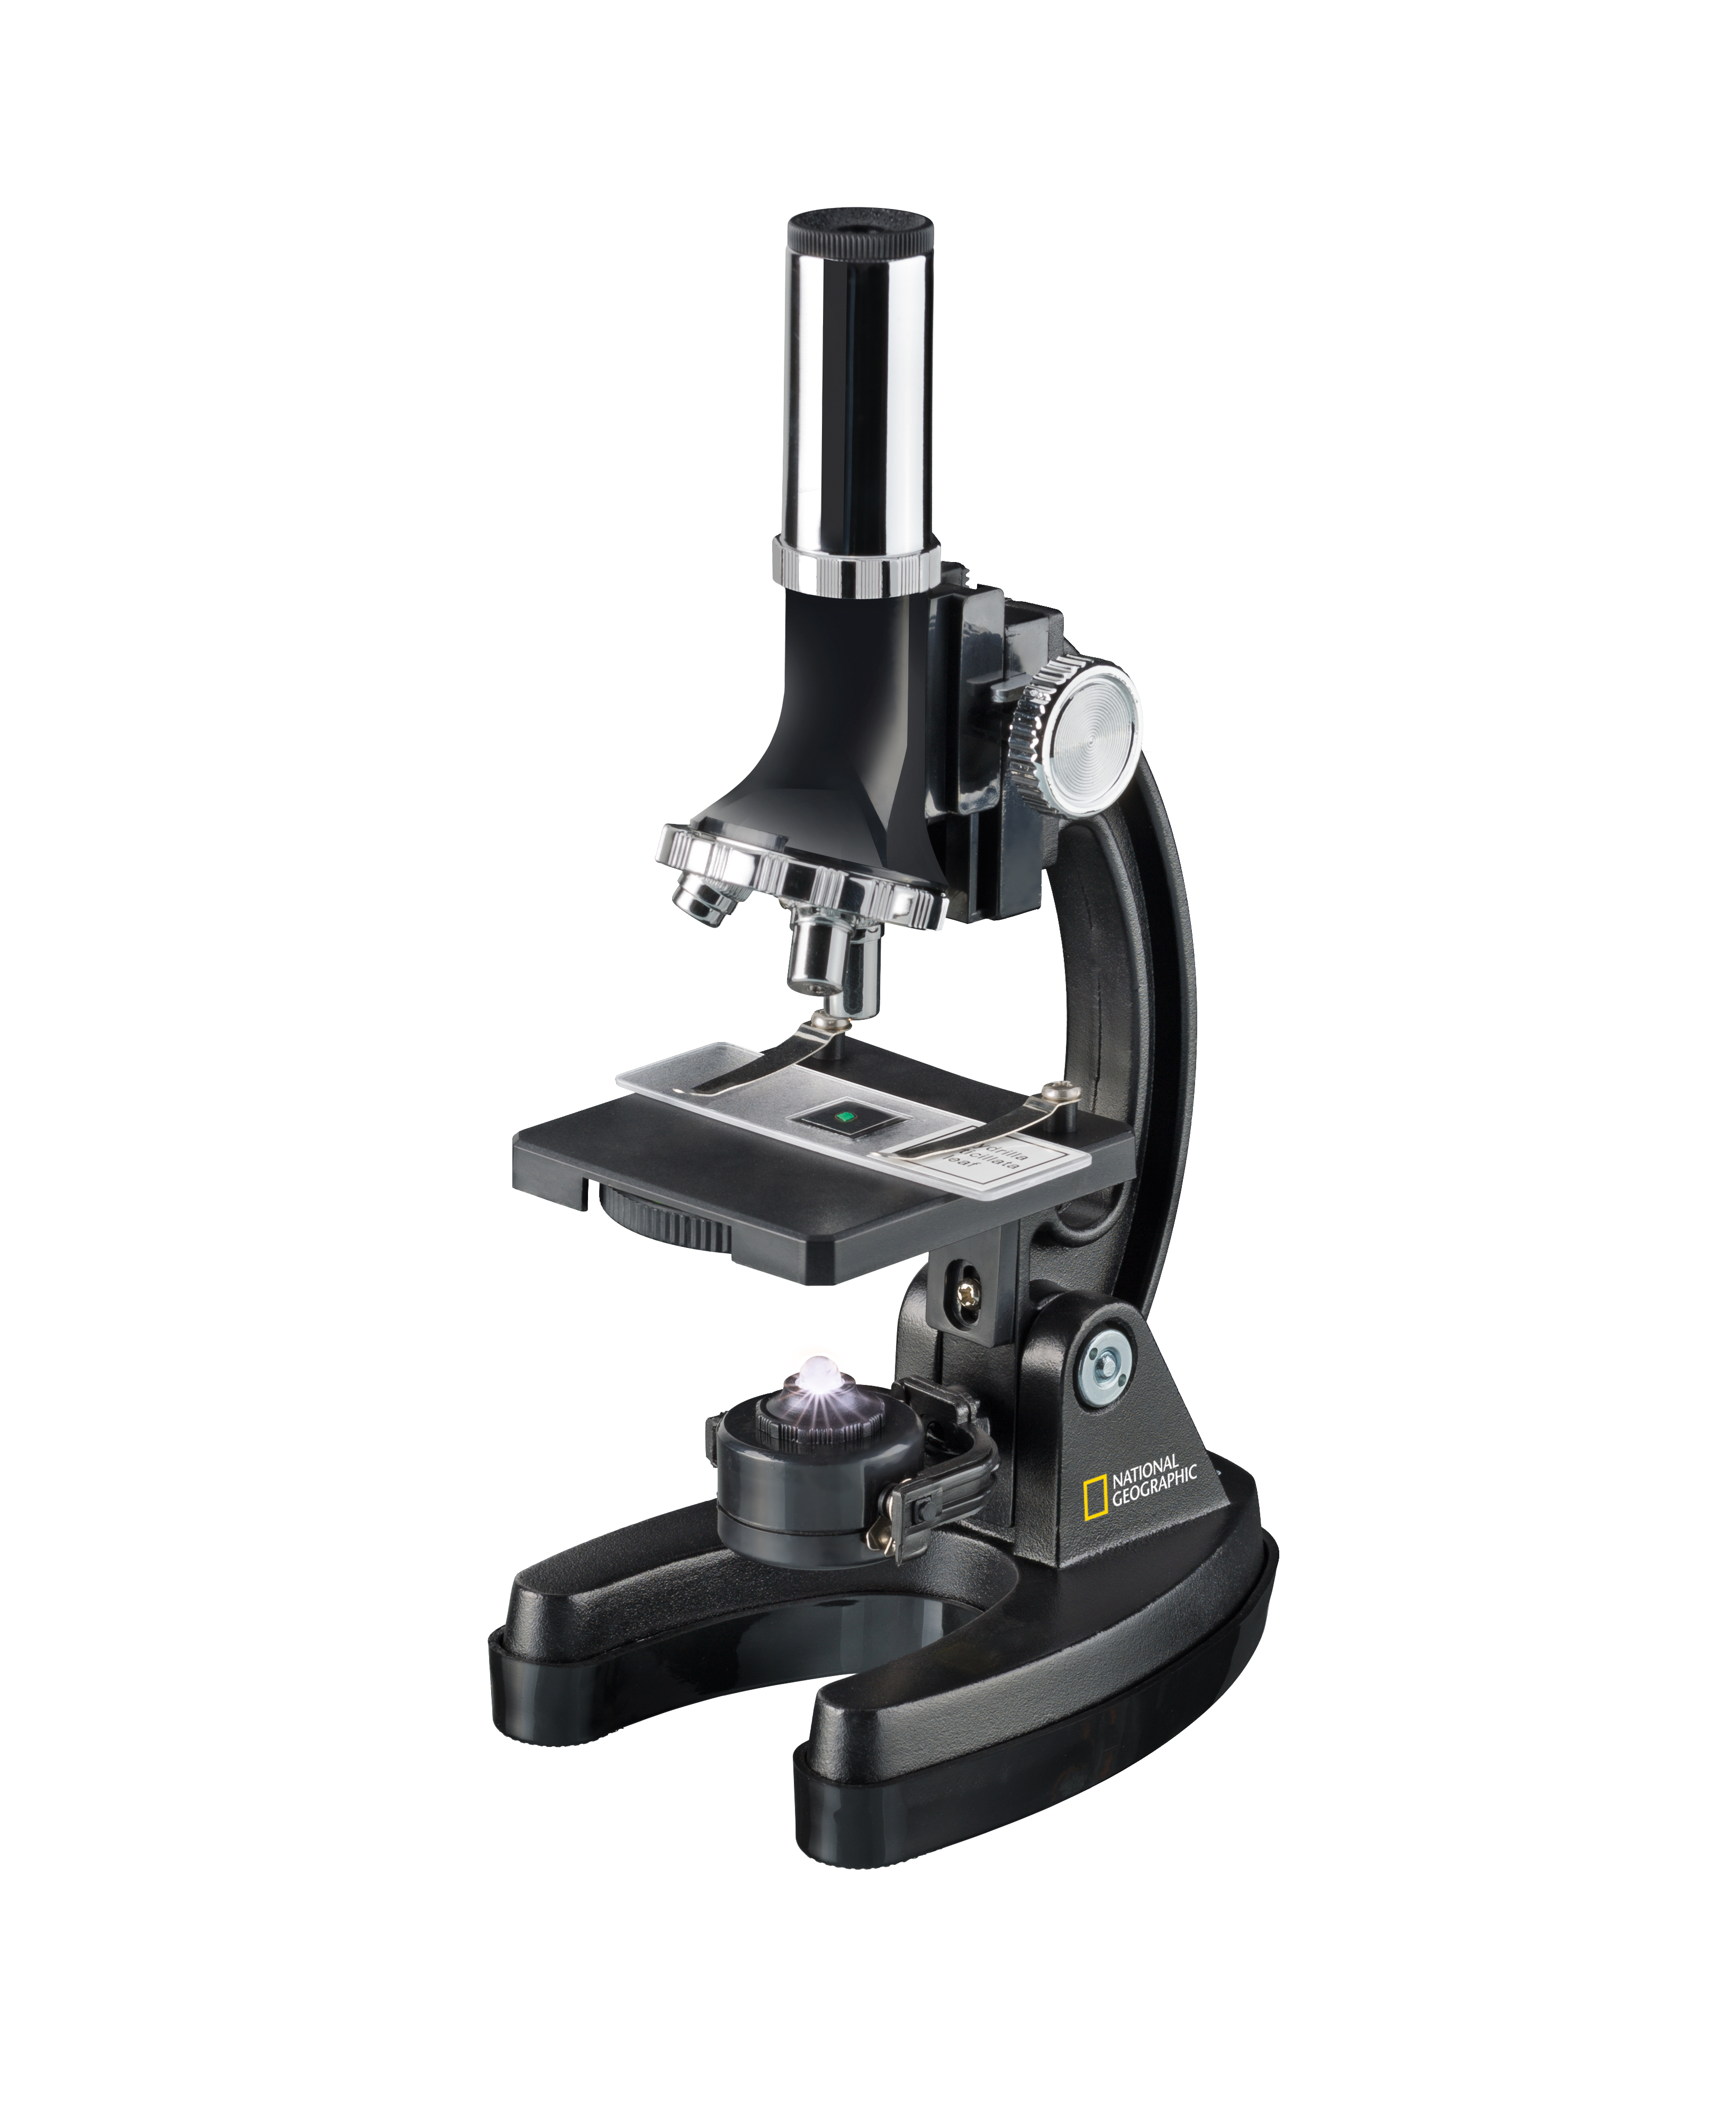 NATIONAL GEOGRAPHIC 300x-1200x Mikroskop (Refurbished)